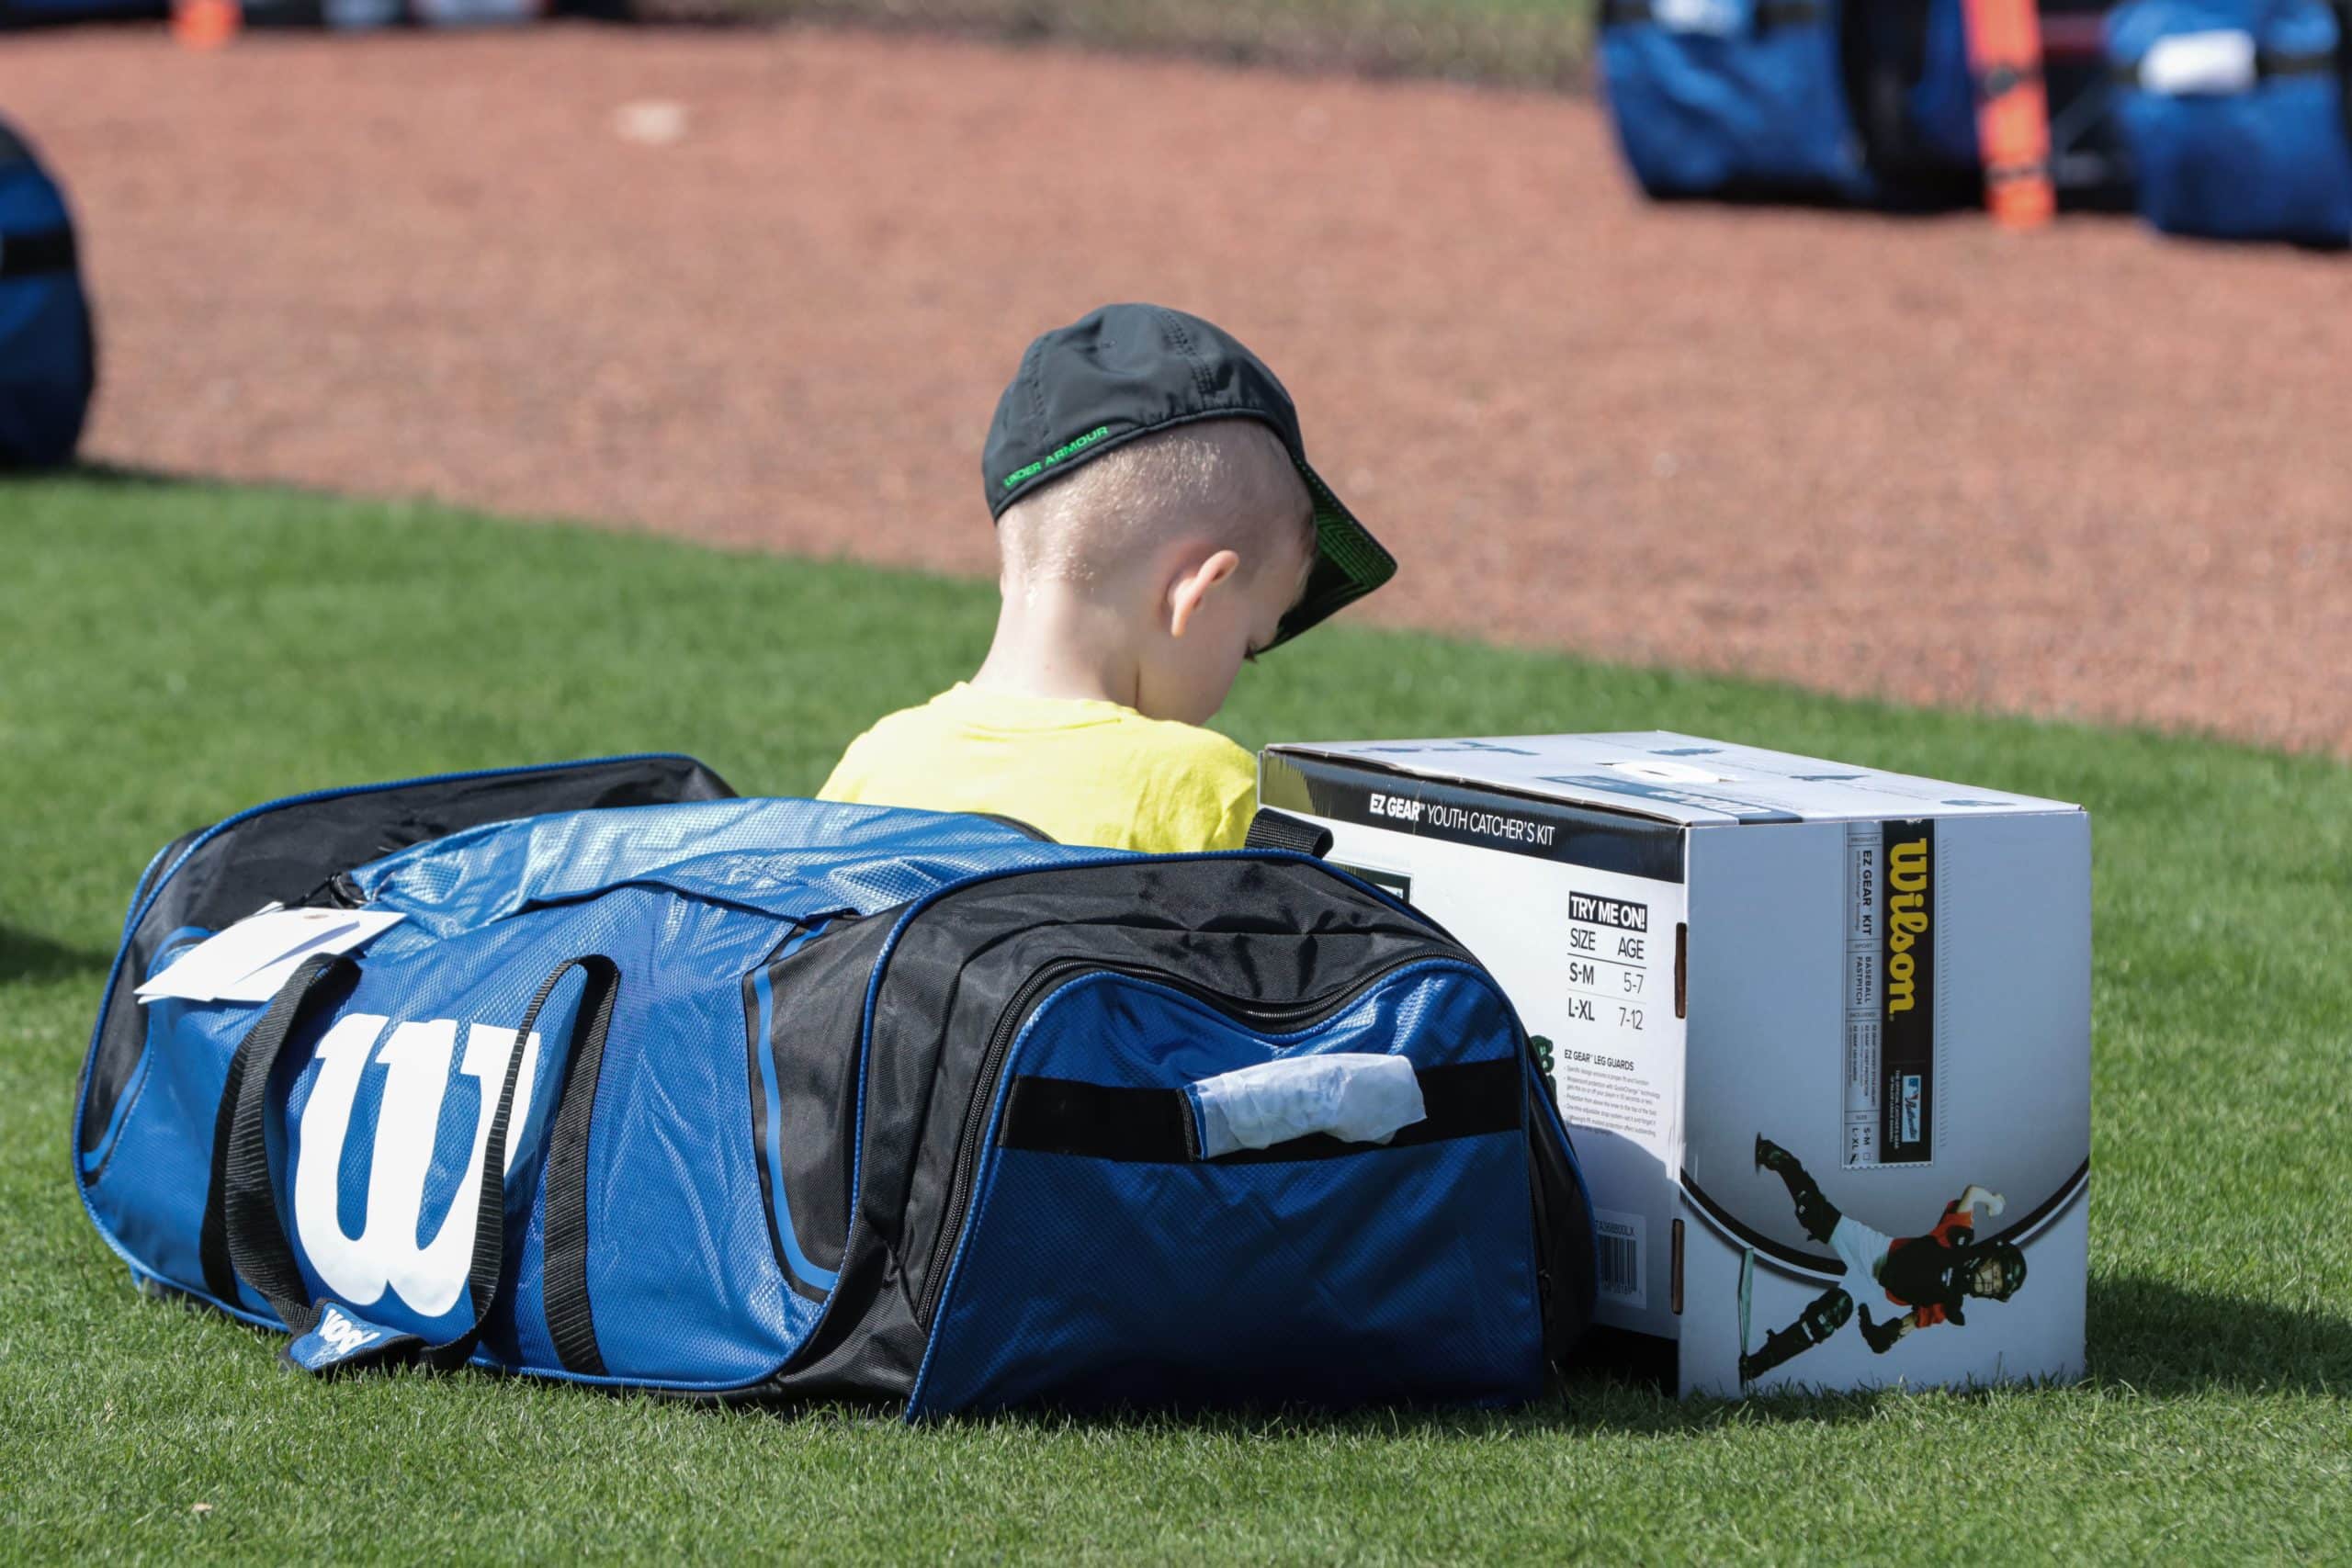 Falcon Softball and Baseball Teams Receive Major Equipment Donation